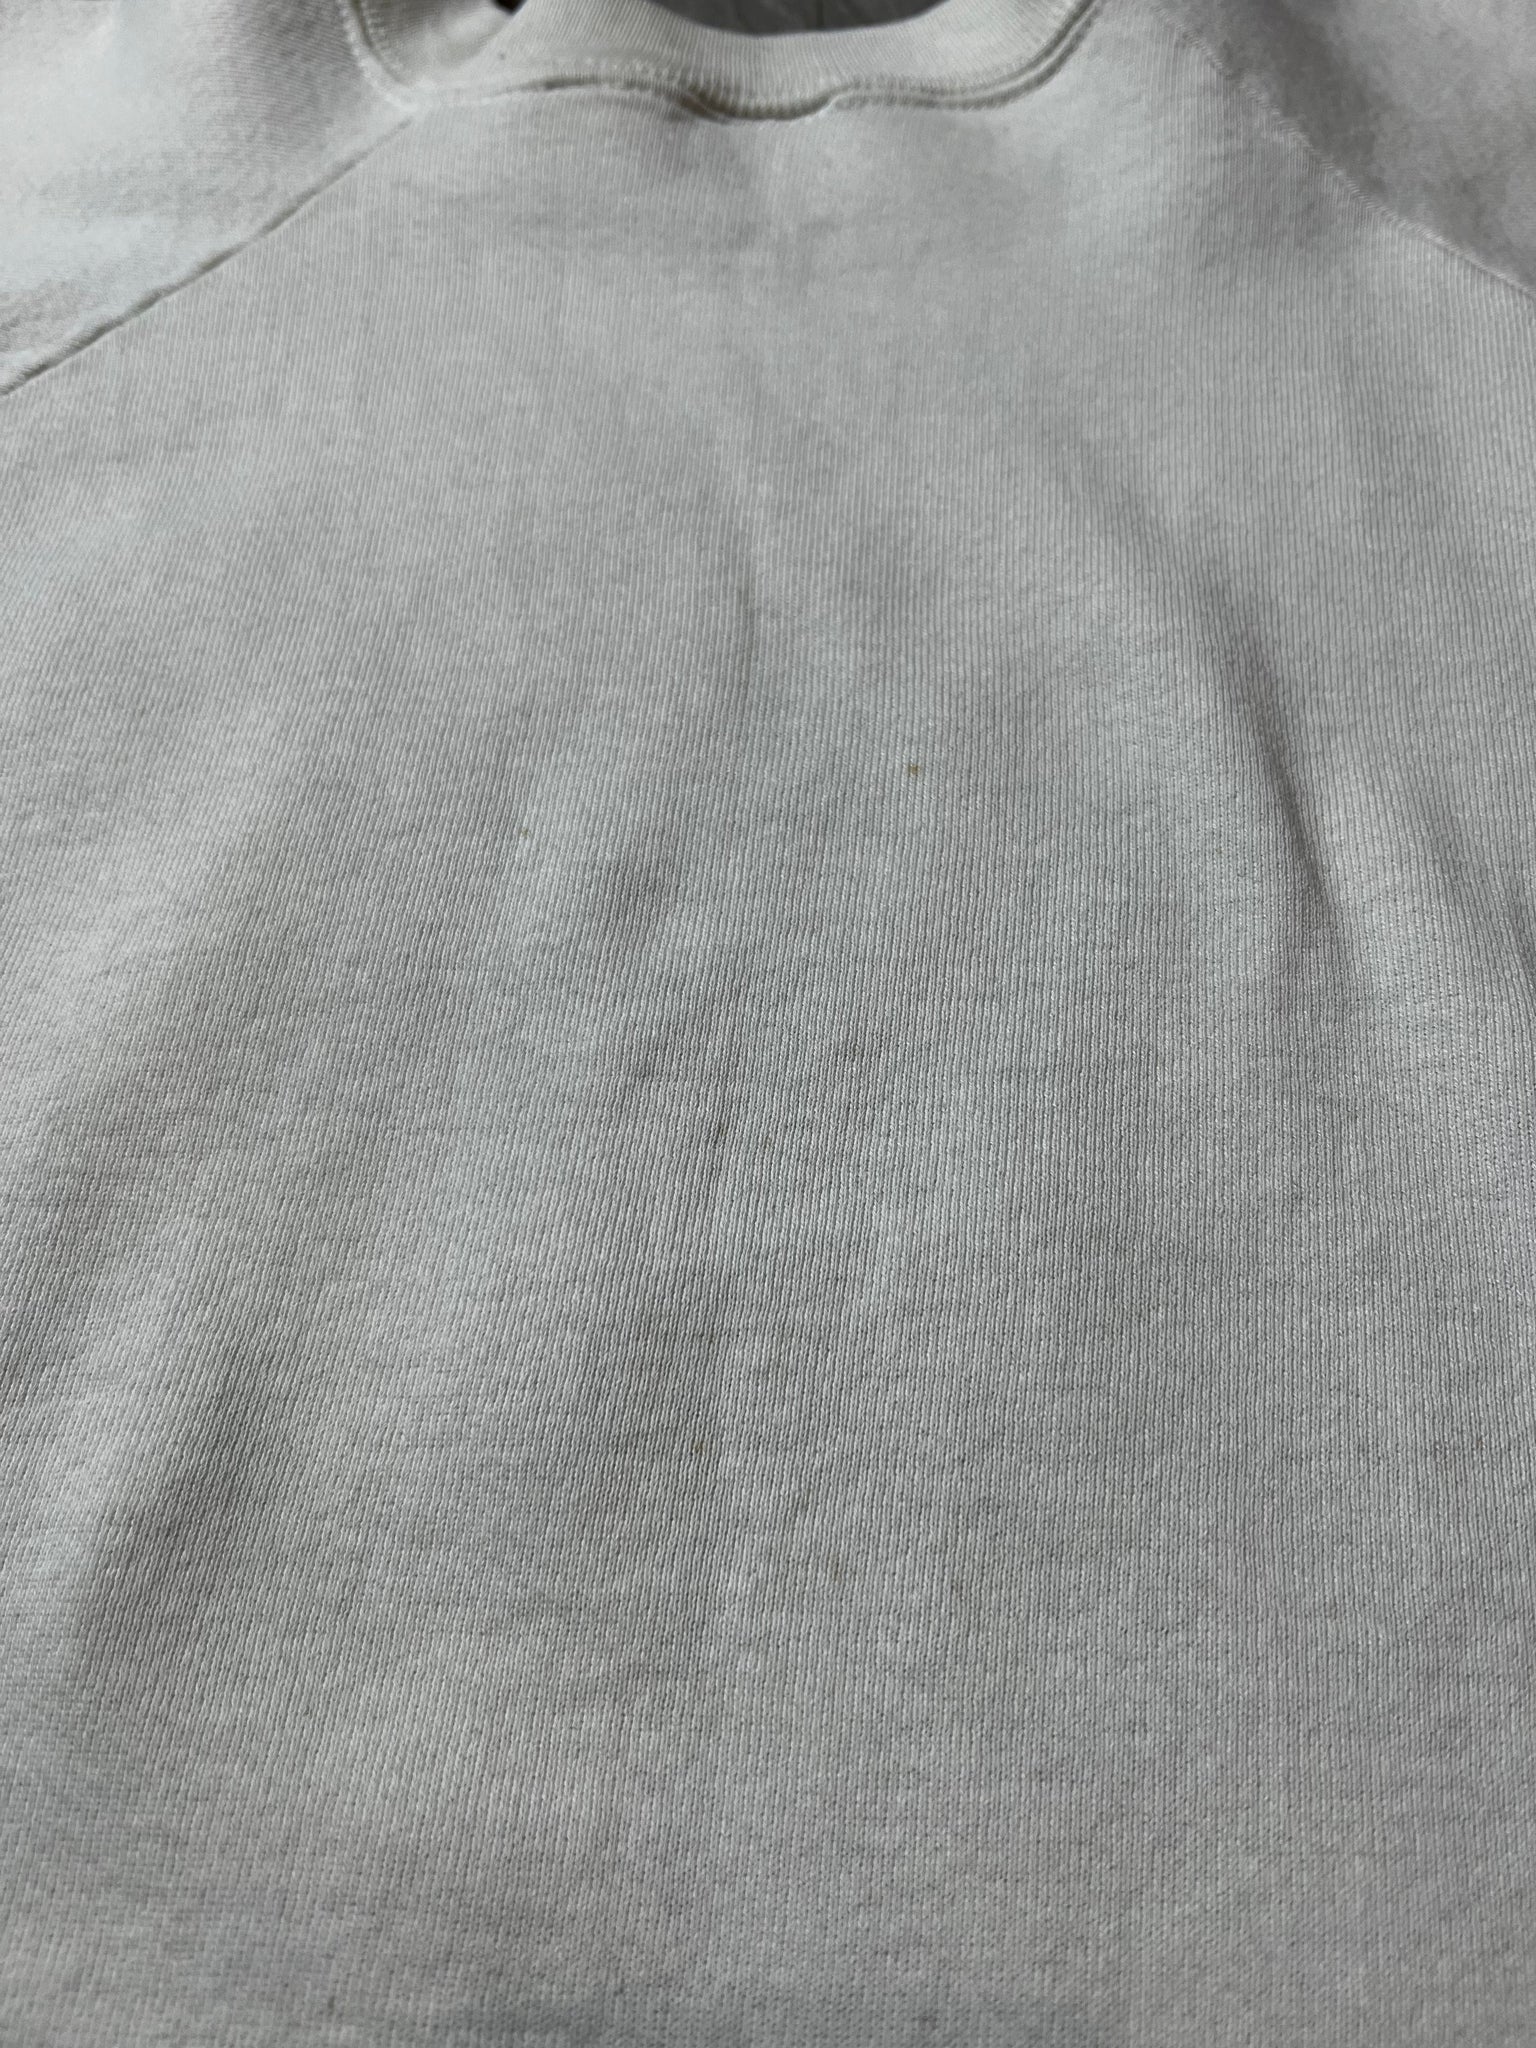 90’s Henry David Thoreau sweatshirt L/XL